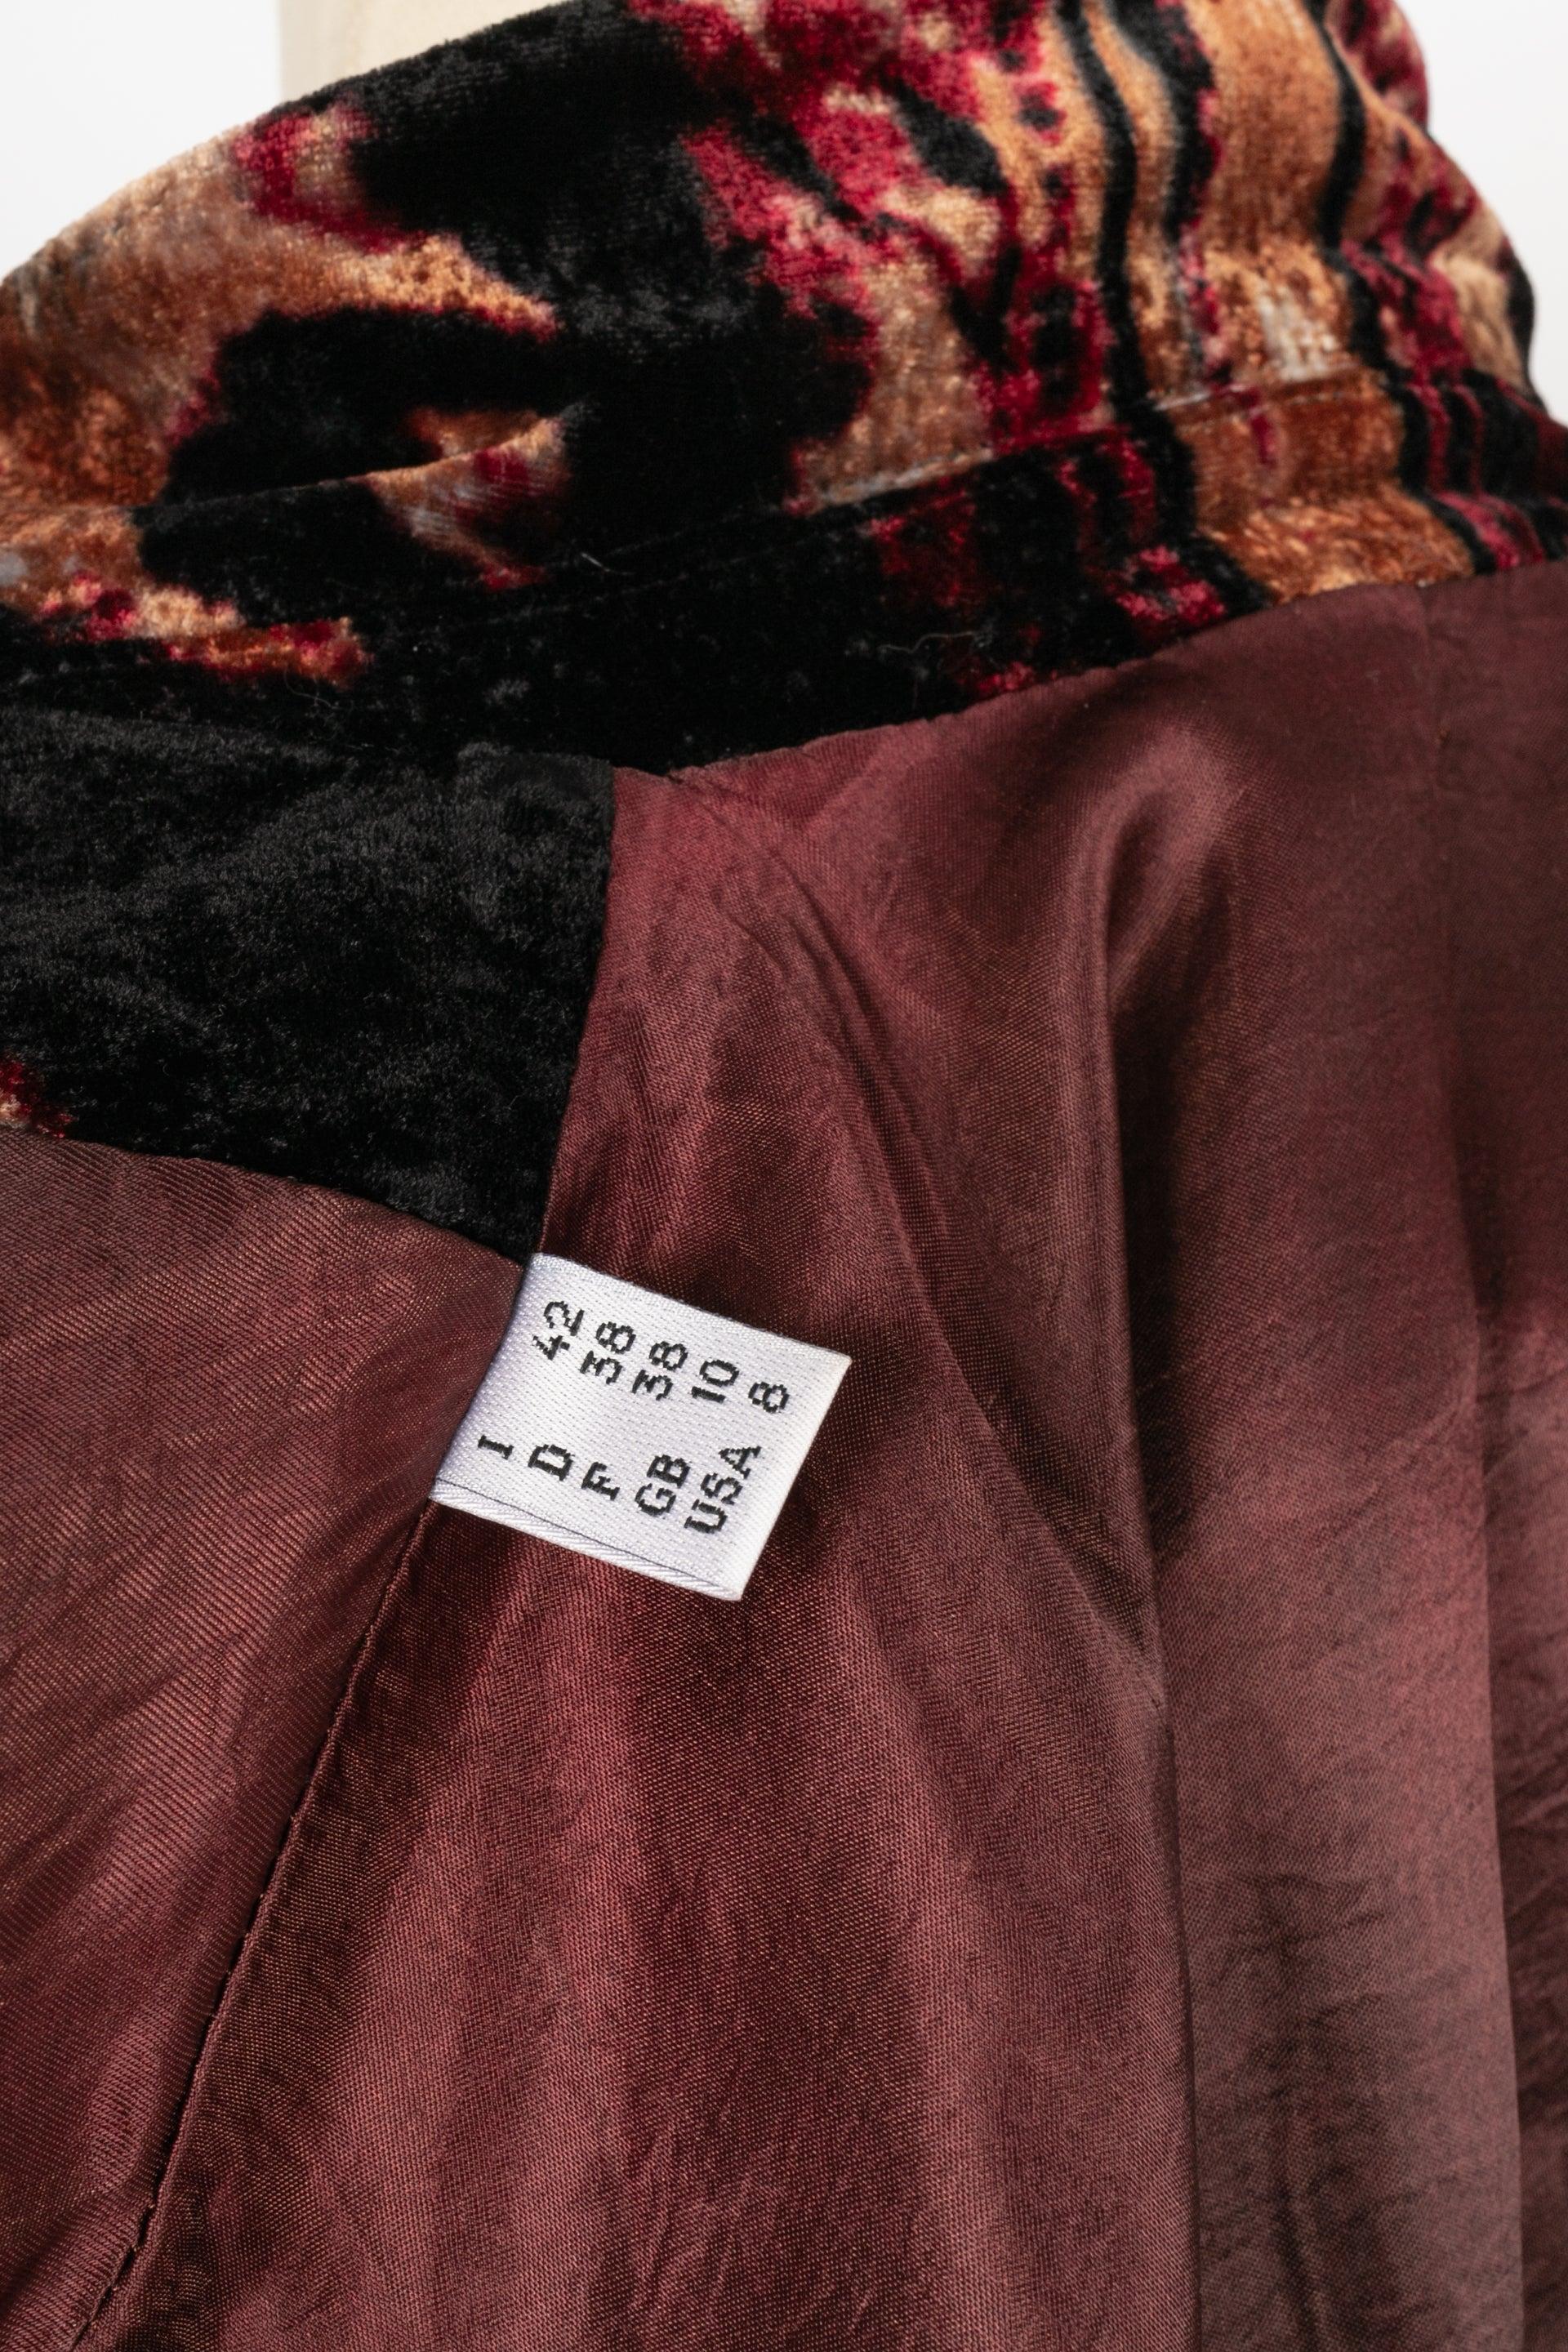 Jean Paul Gaultier Patterned Velvet Jacket For Sale 2